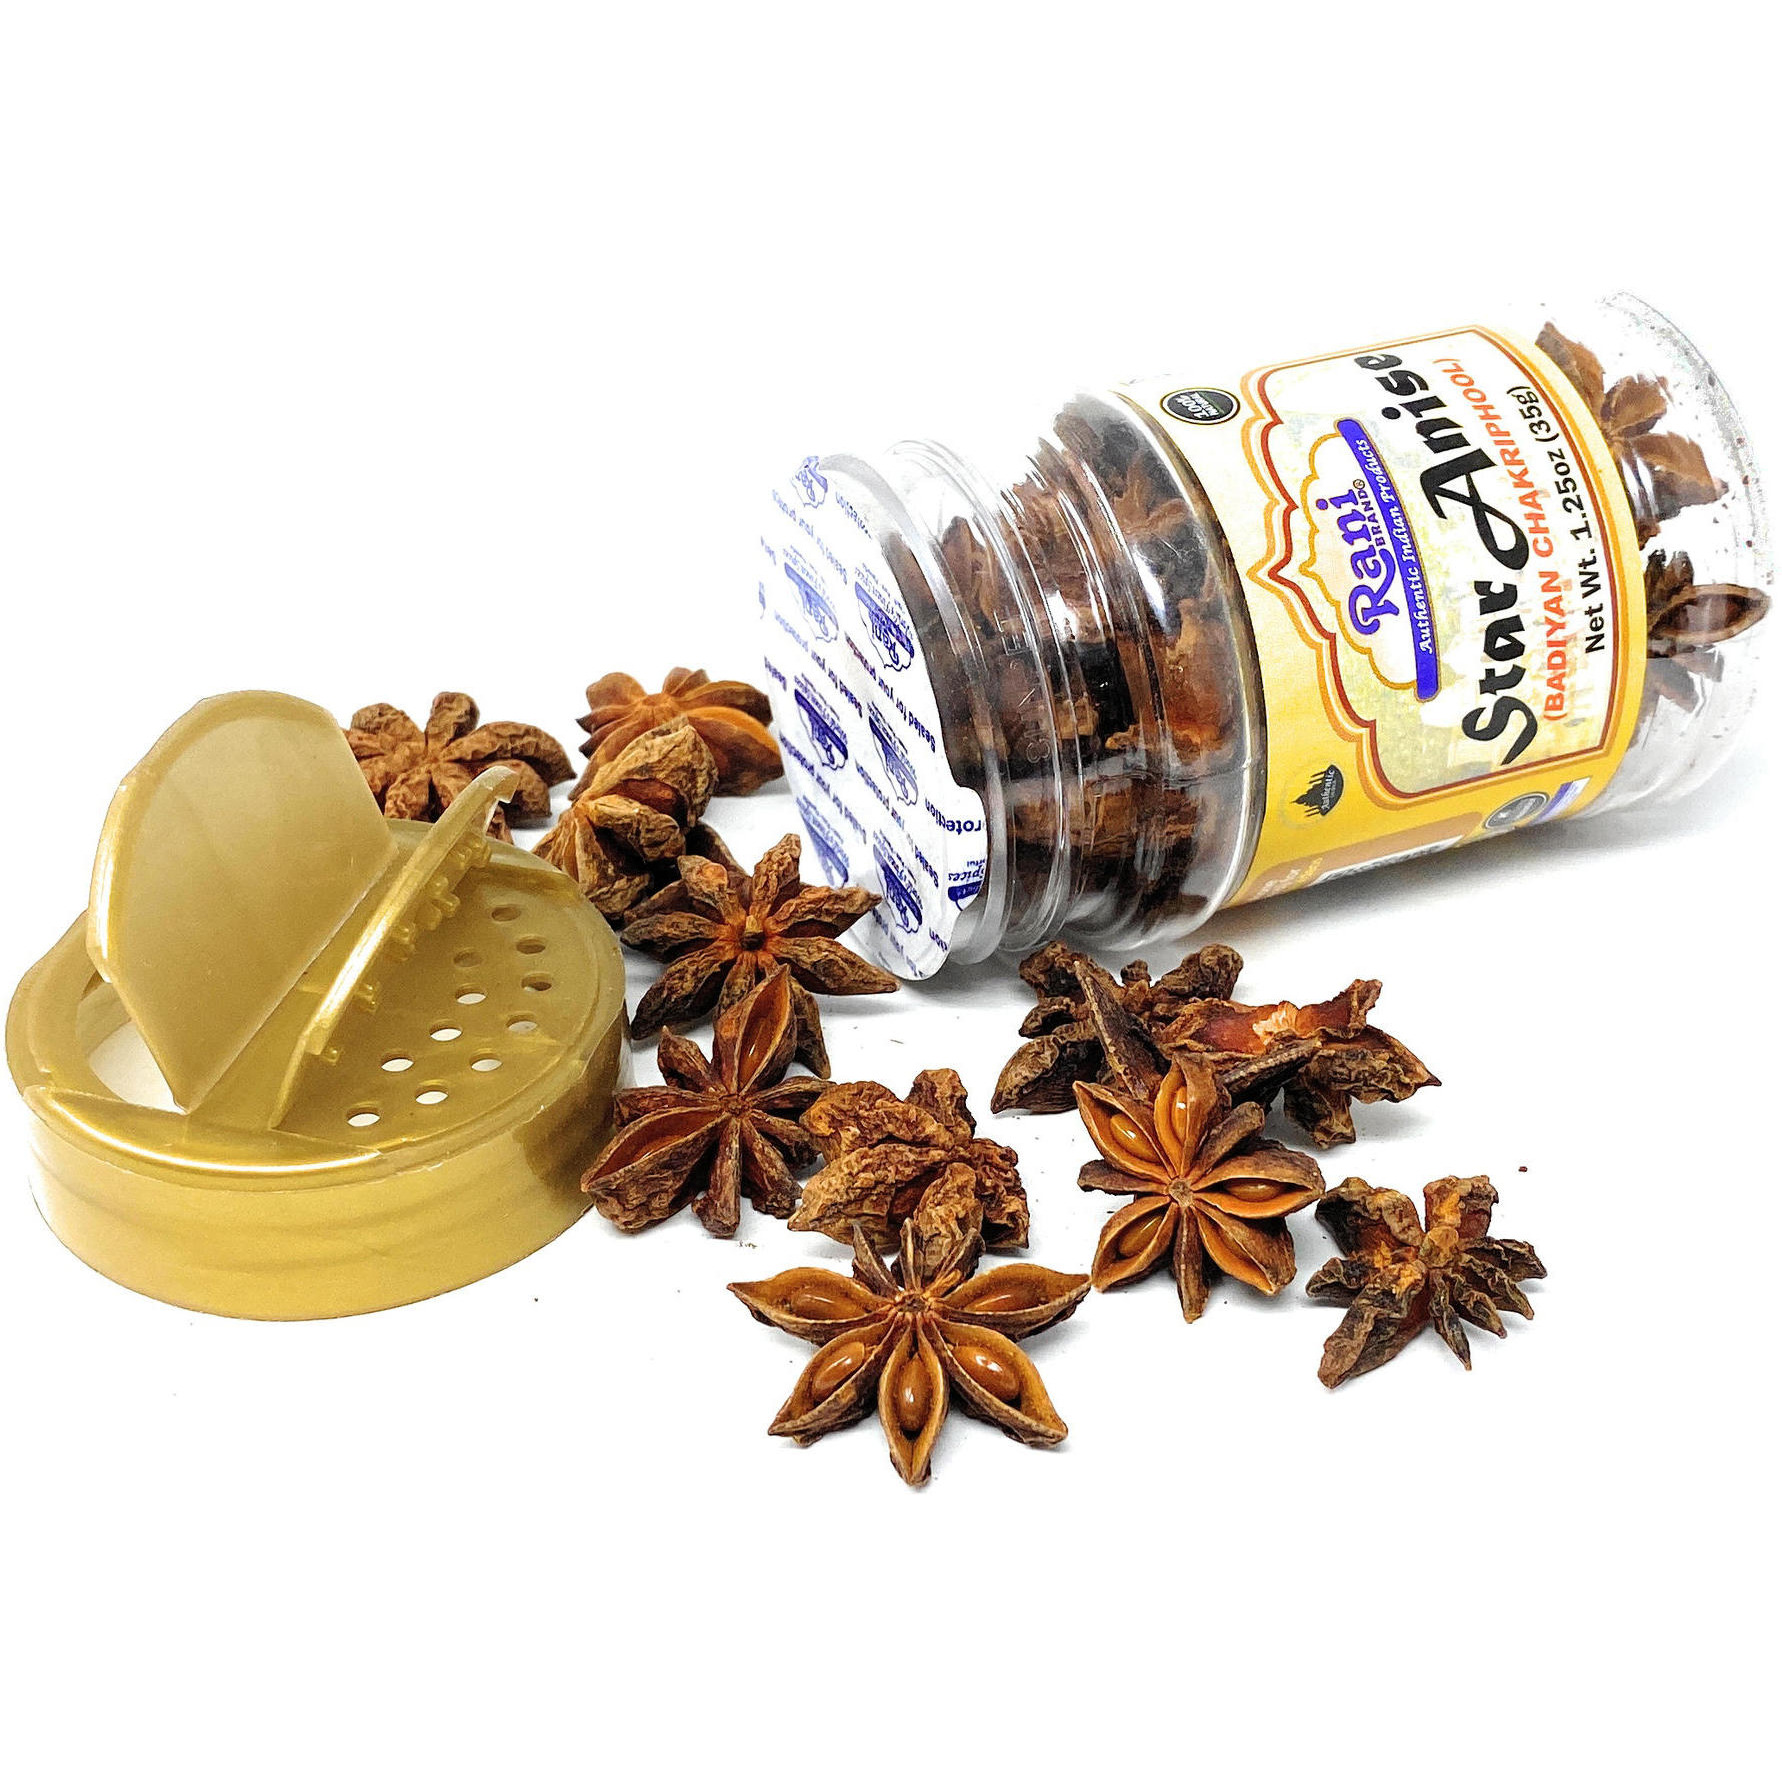 Rani Star Anise Seeds, Whole Pods (Badian Khatai) Spice 1.25oz (35g) PET Jar ~ All Natural ~ Gluten Friendly  | NON-GMO | Vegan | Indian Origin